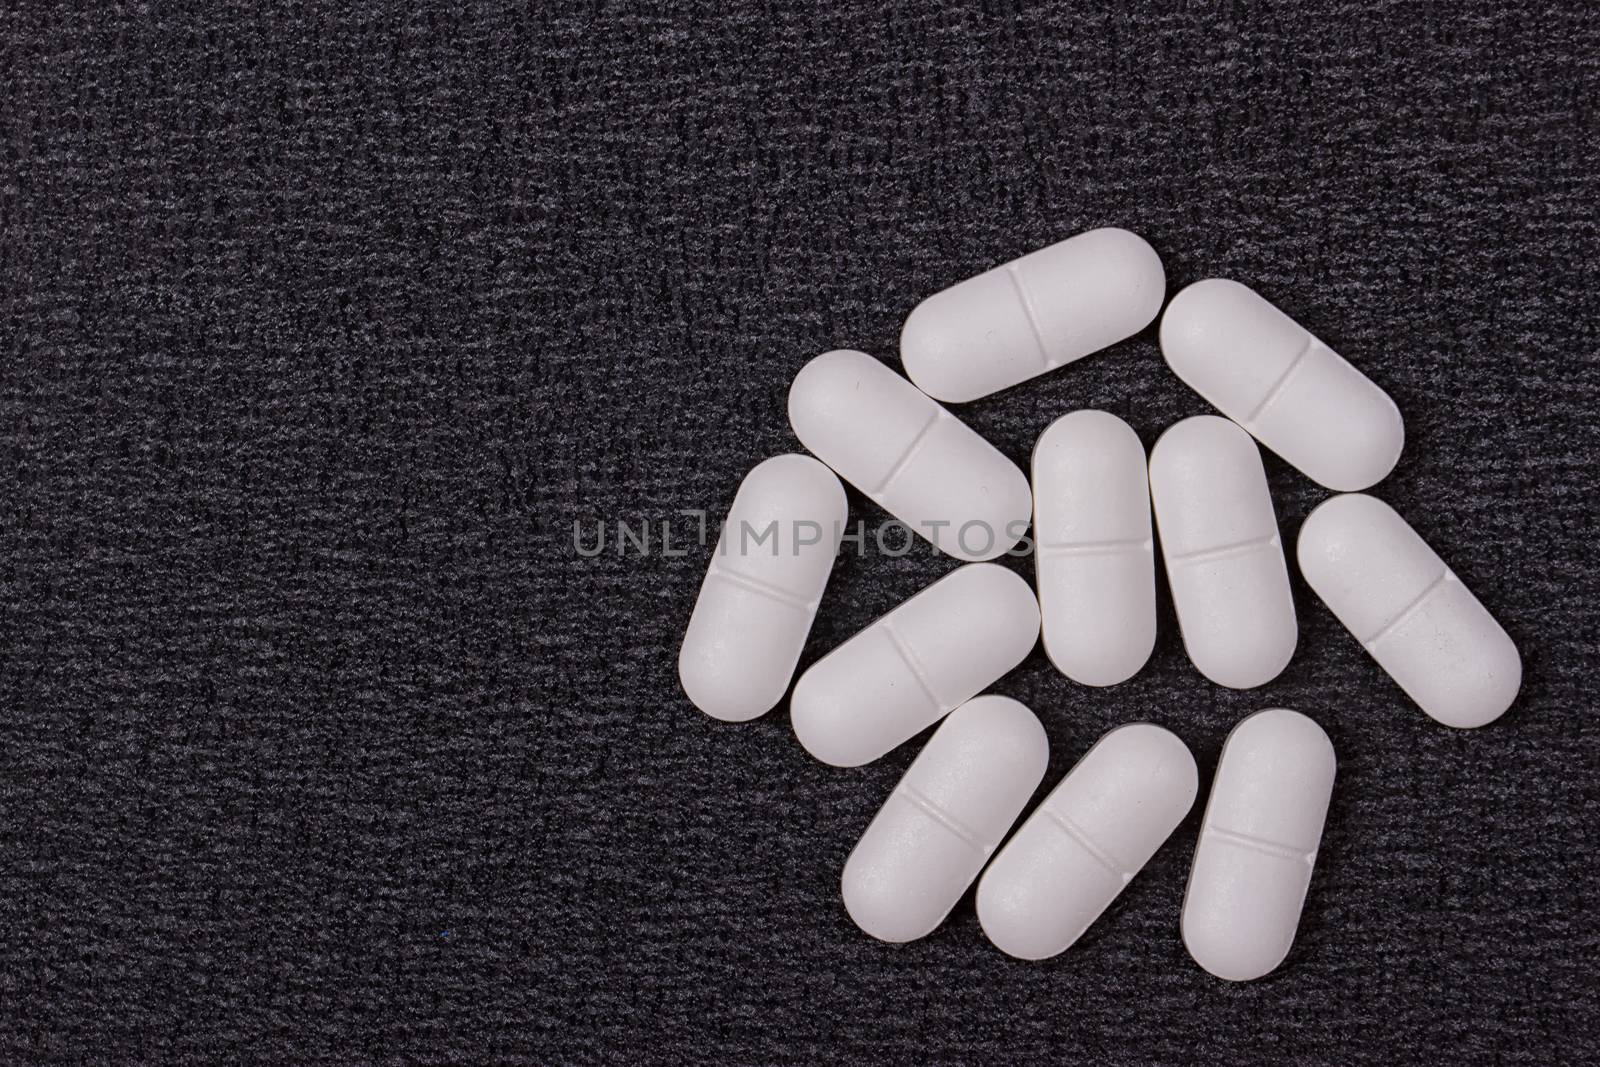 close up white pills on black background.